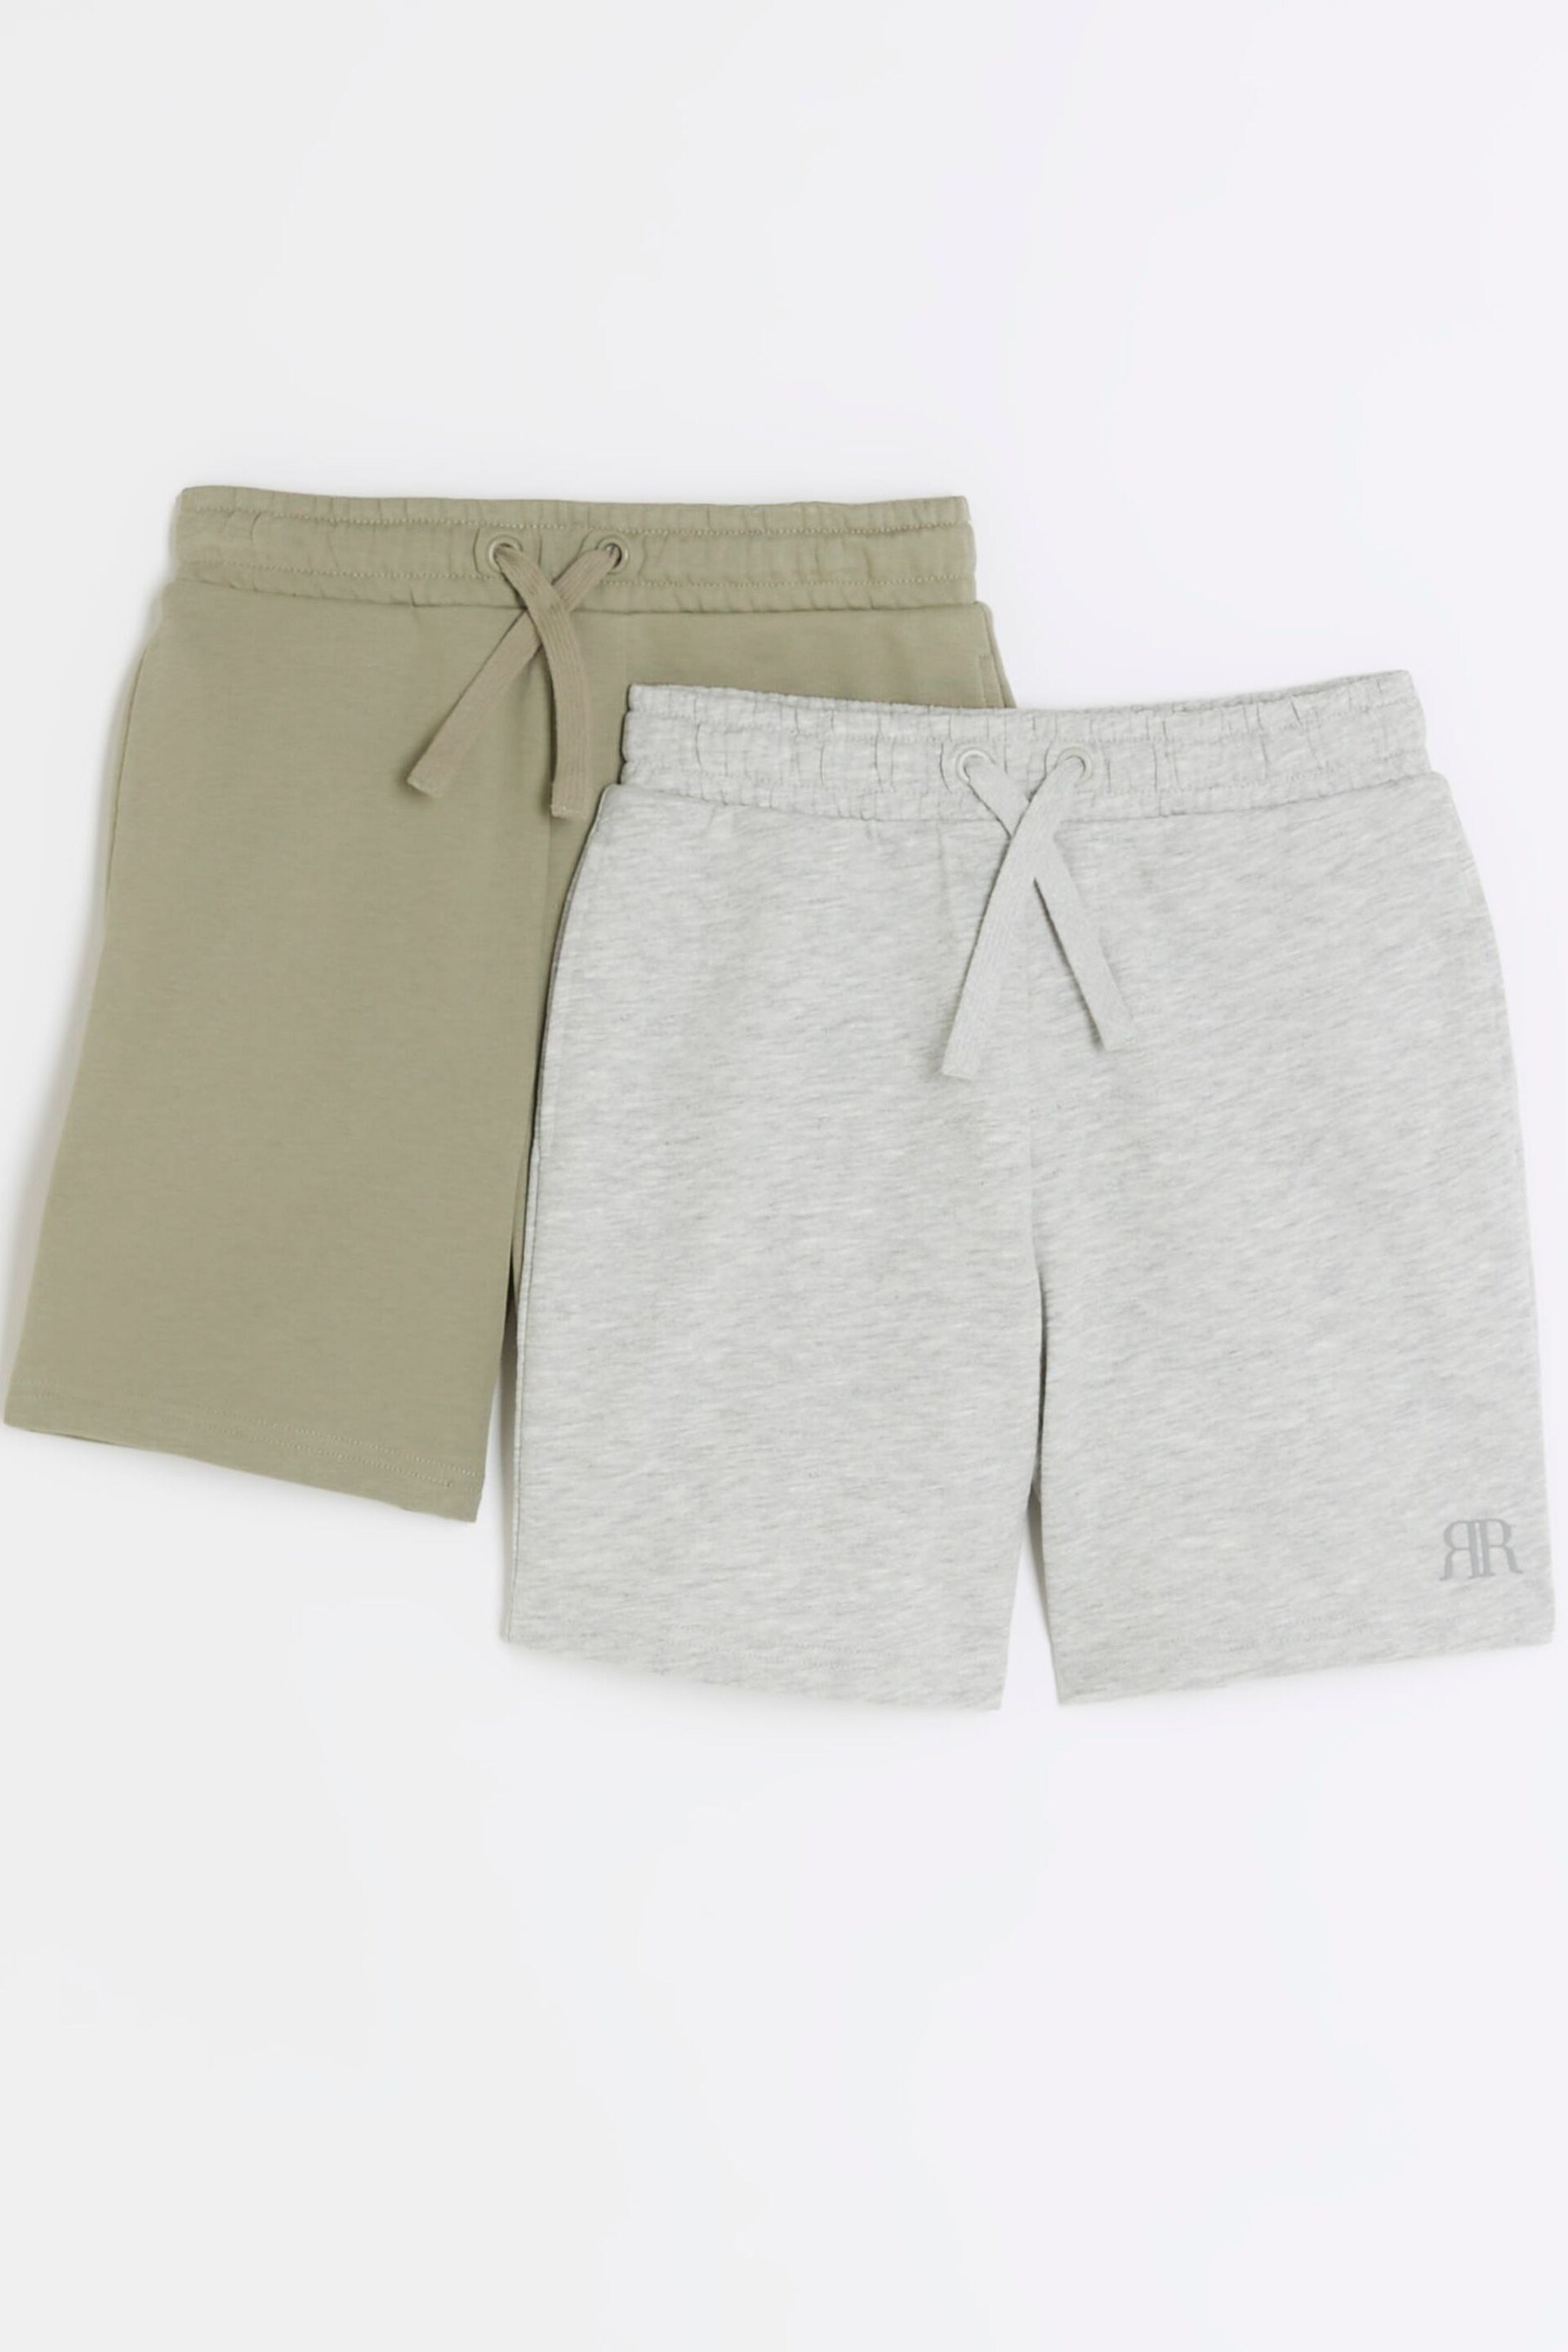 River Island Grey Mini Boys Multipack Shorts - Image 1 of 4